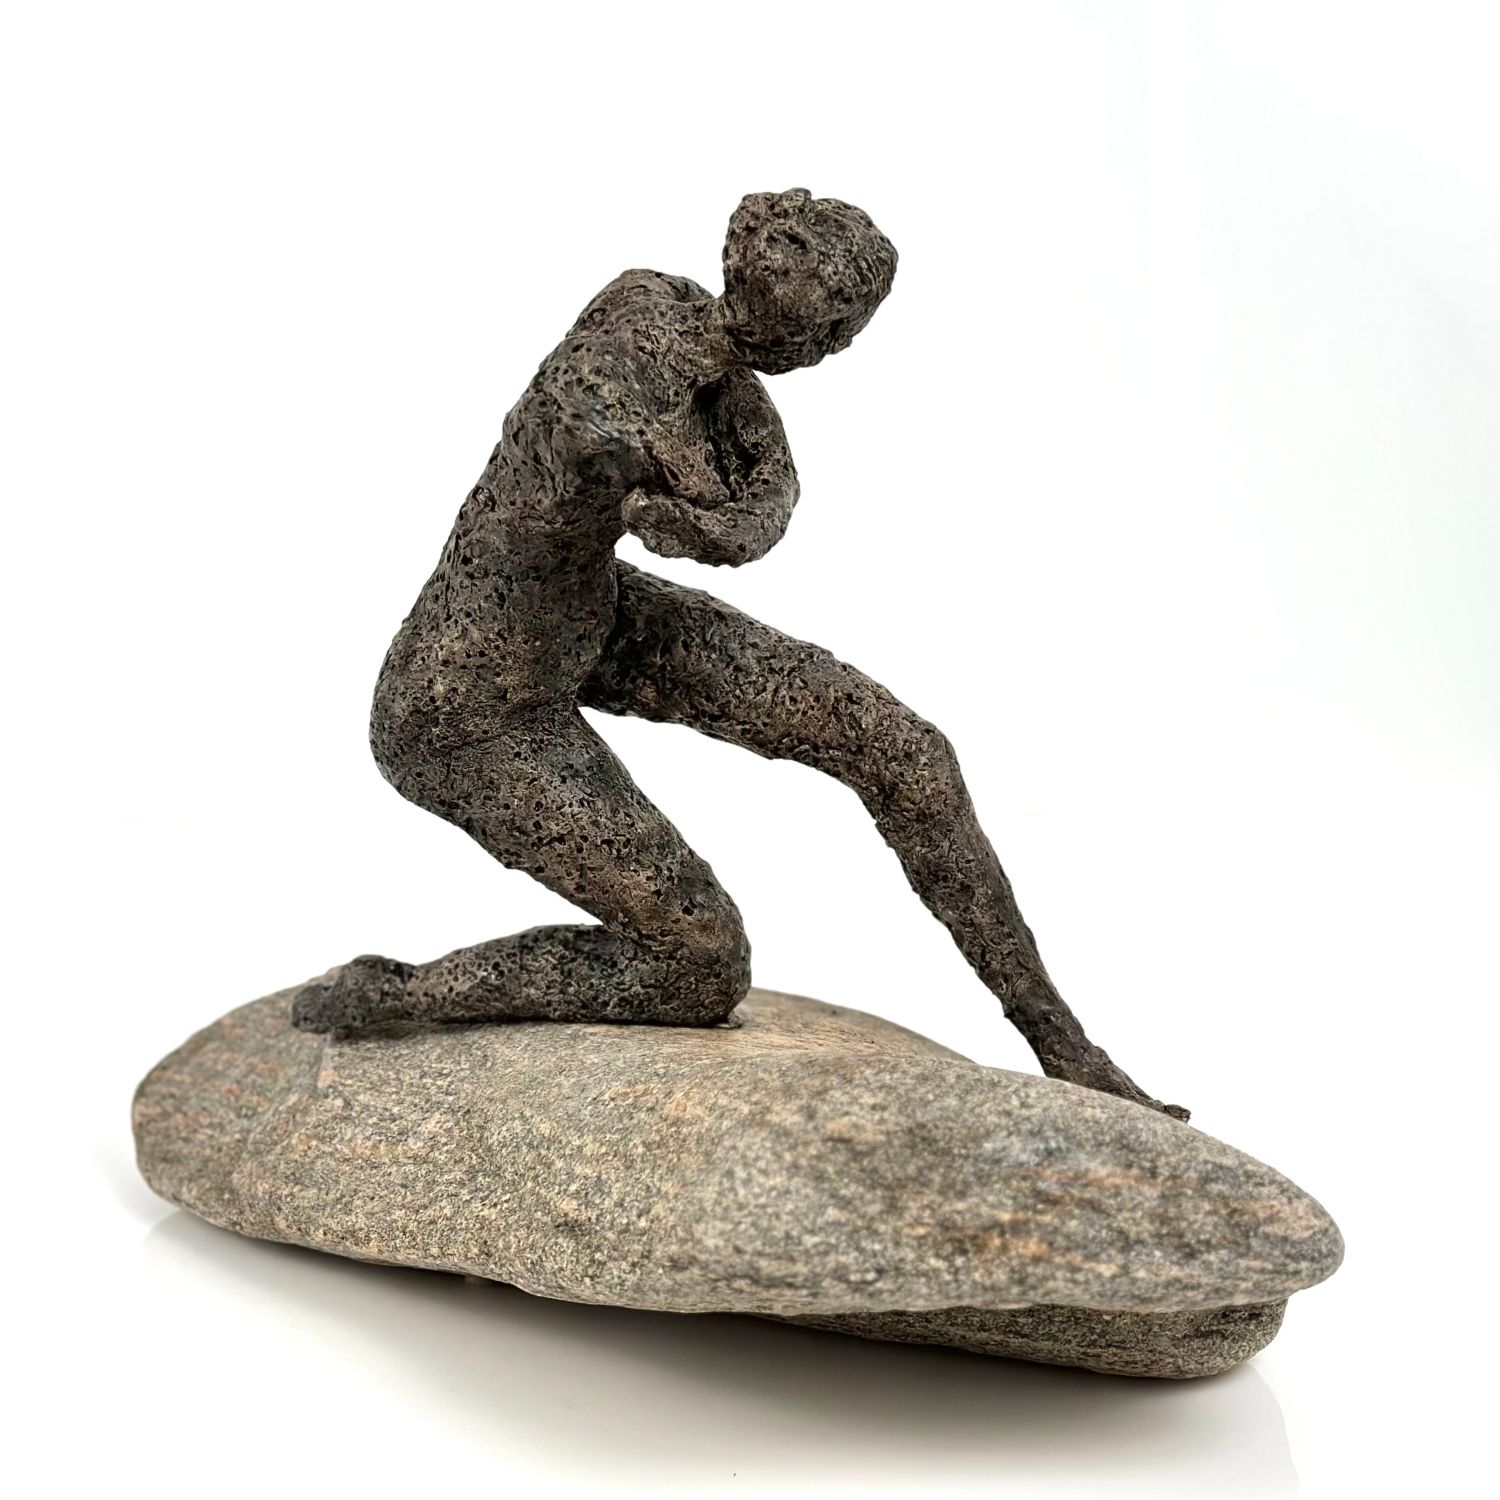 Catharina Goldnau: Kneeling Female on a Rock Product Image 1 of 4